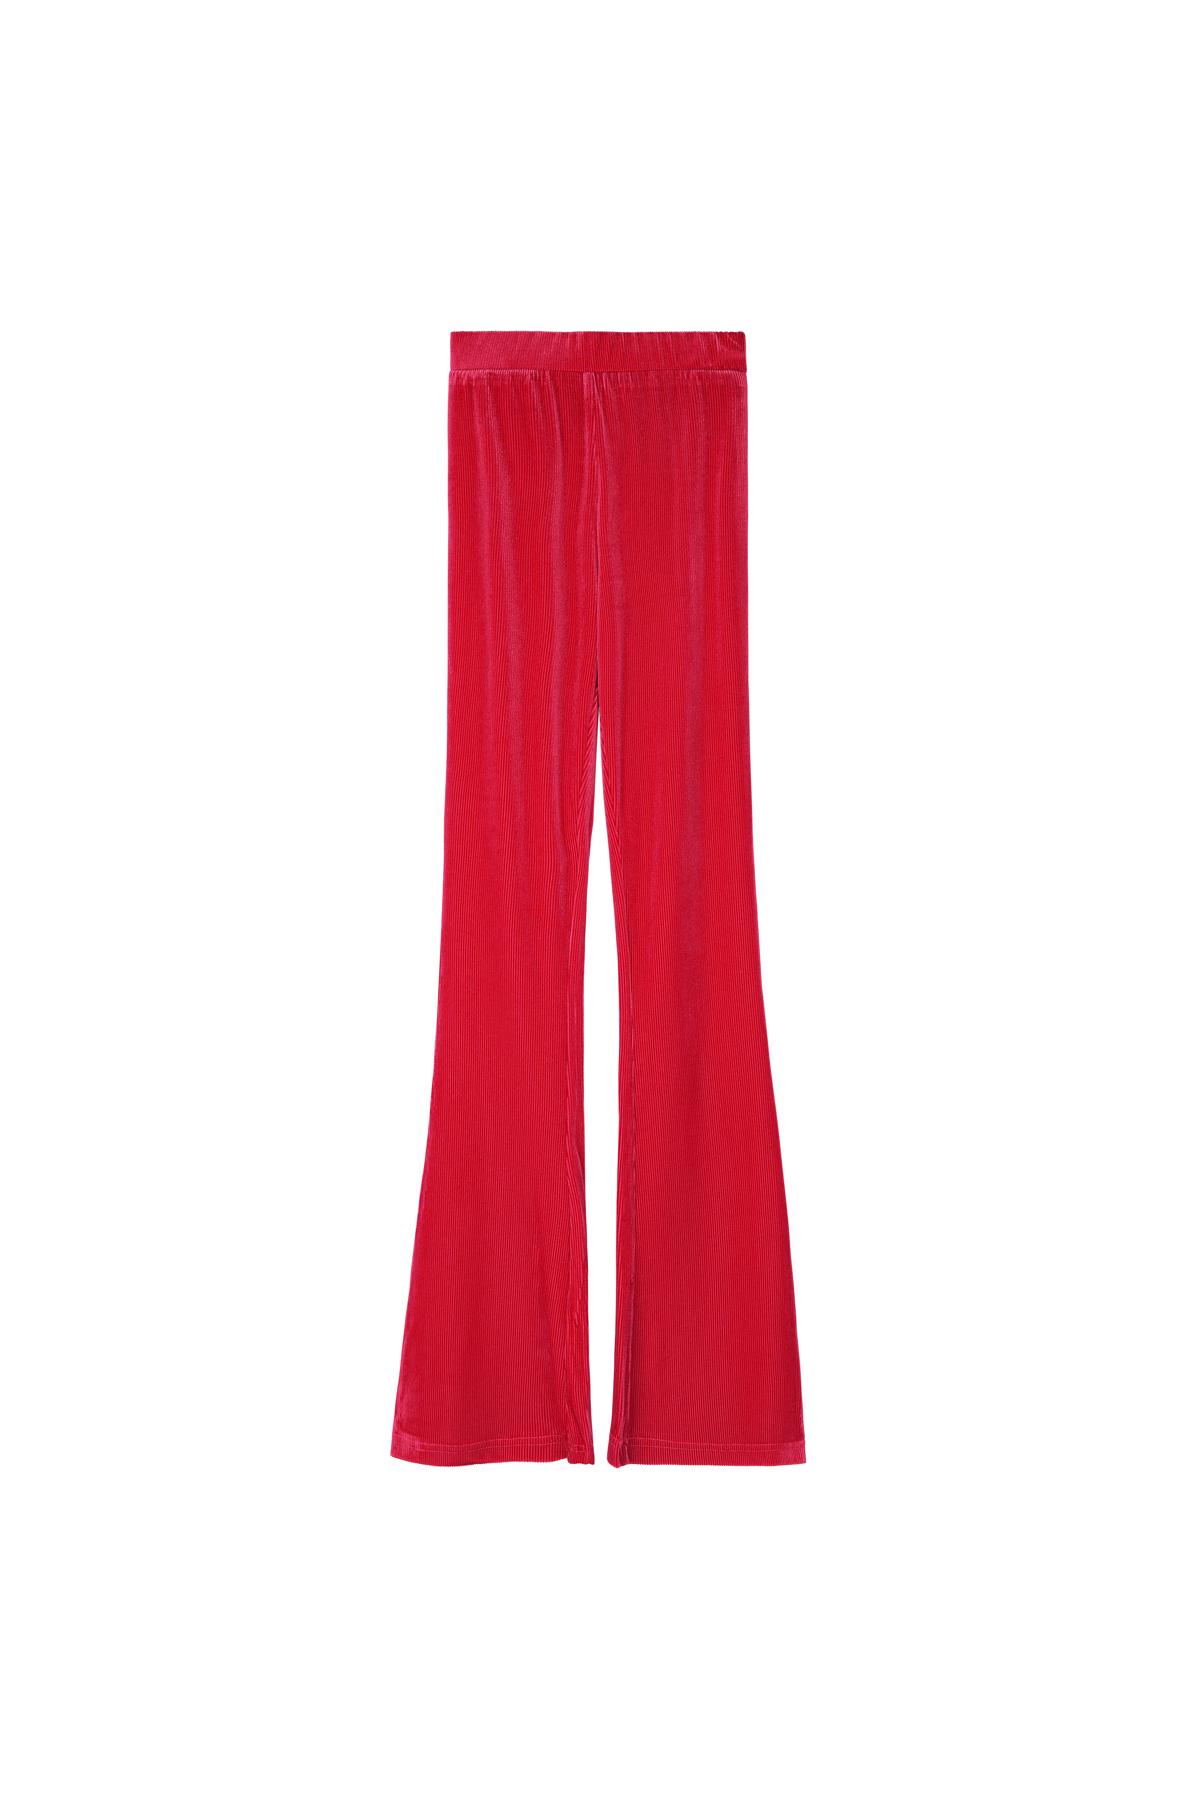 pantolon asır Red S h5 